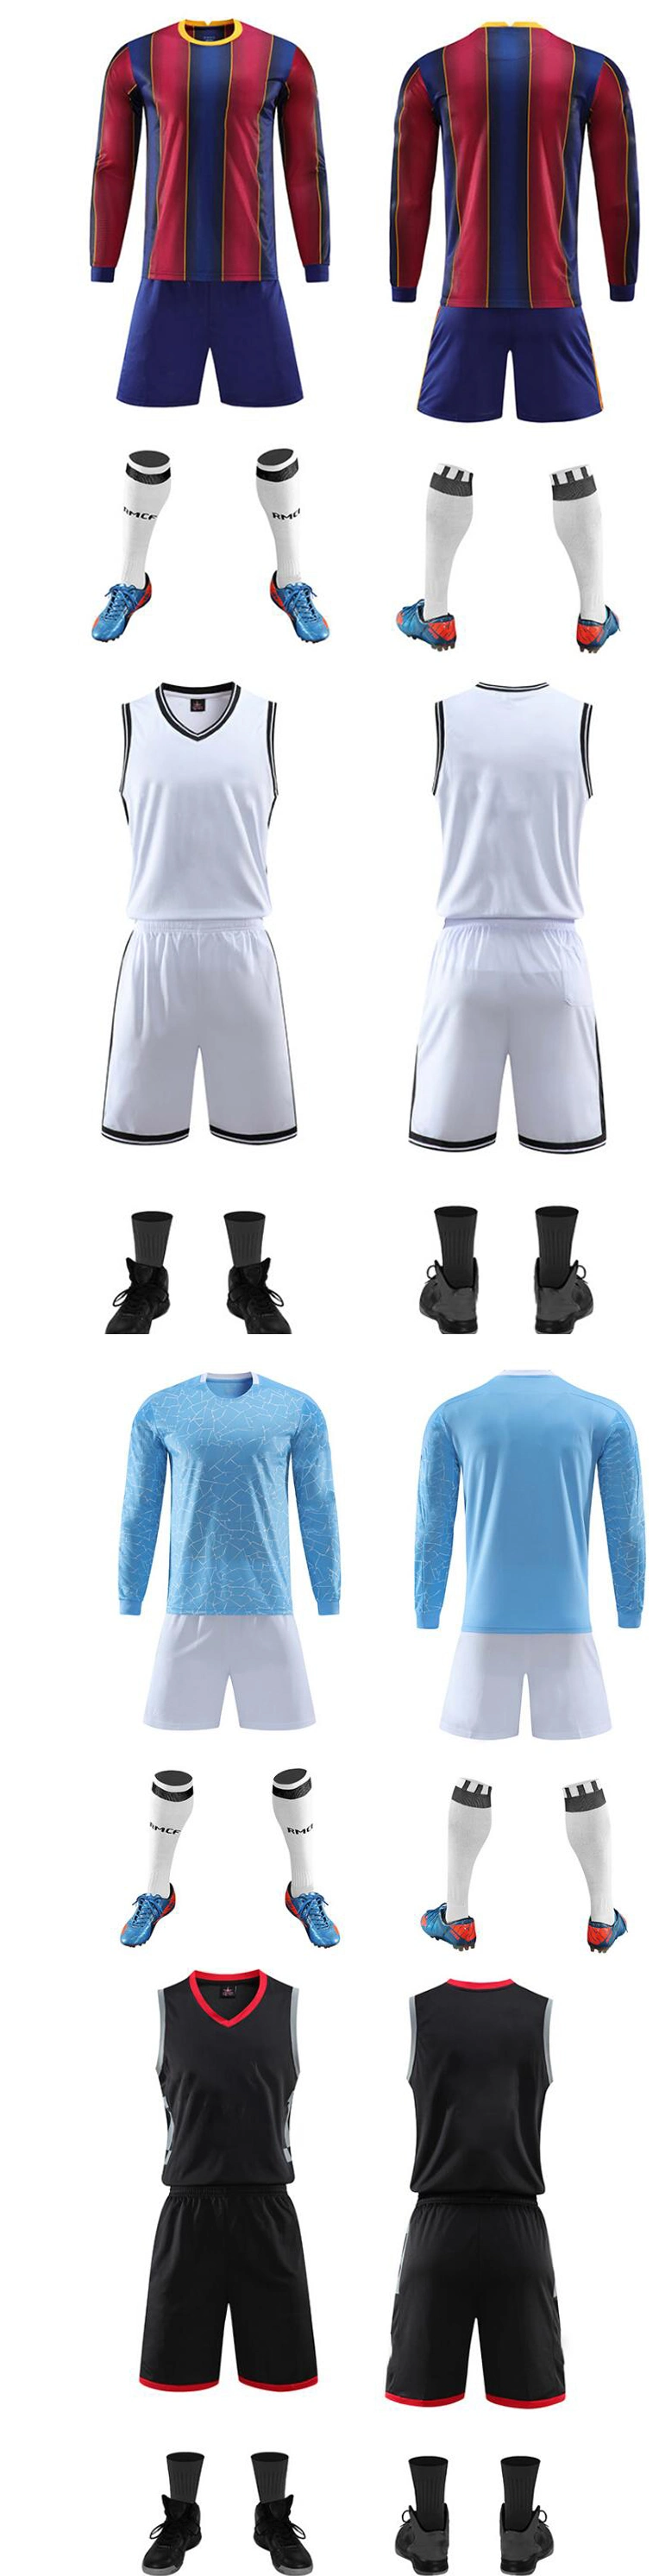 Custom Football Jersey Football Shirt Uniform 2021 Season Soccer Jersey Set